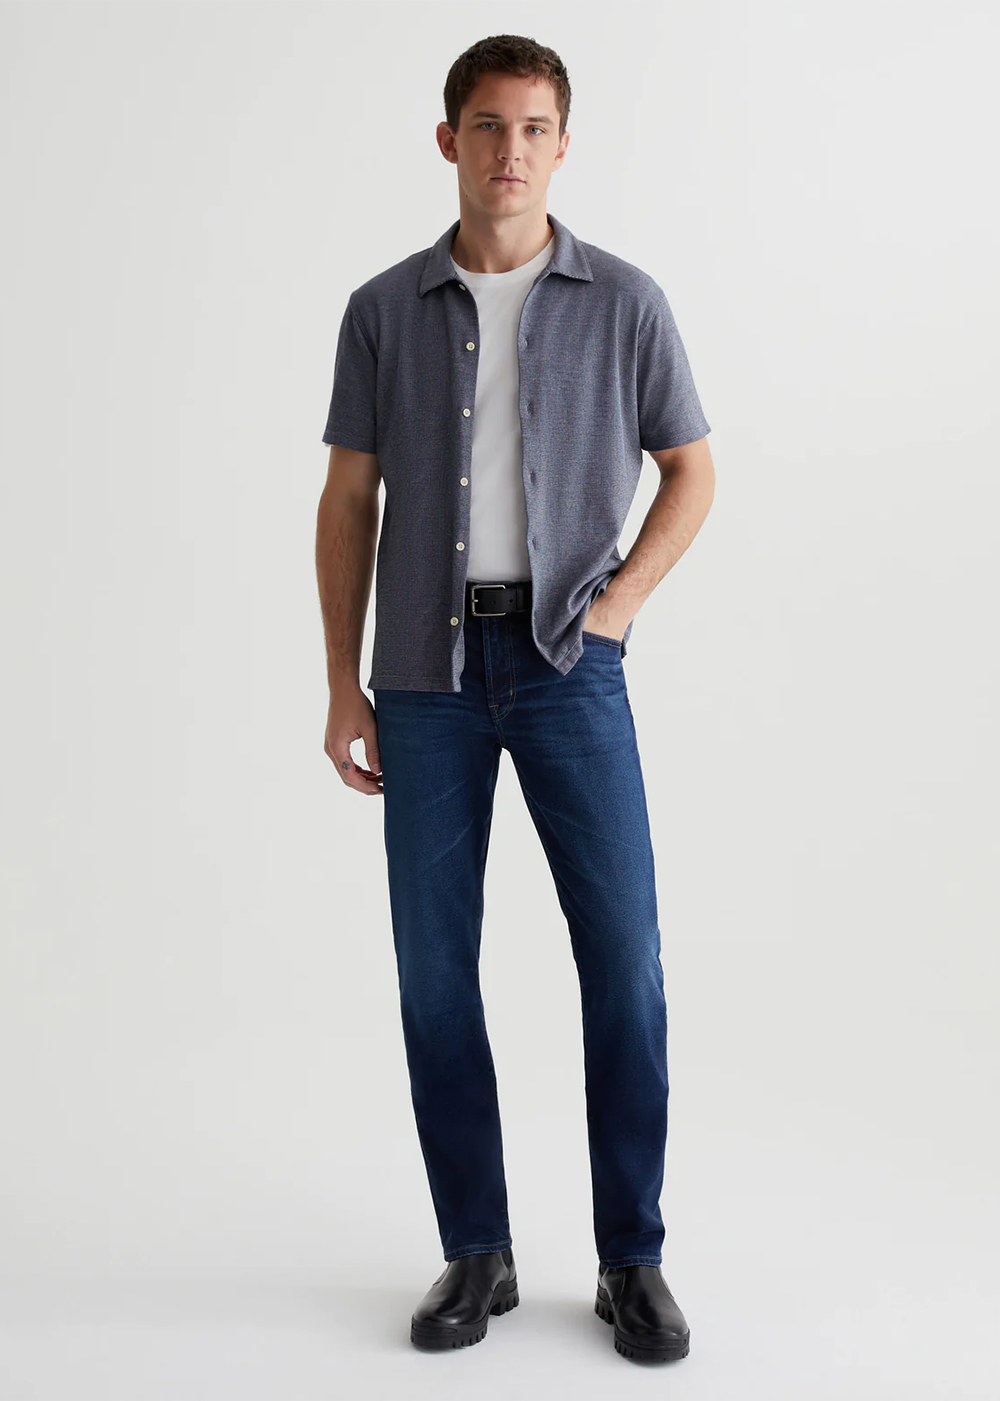 Everett Slim Straight Jean - 4 Years Parker - AG Jeans Canada - Danali - 1794CCS04YPRK